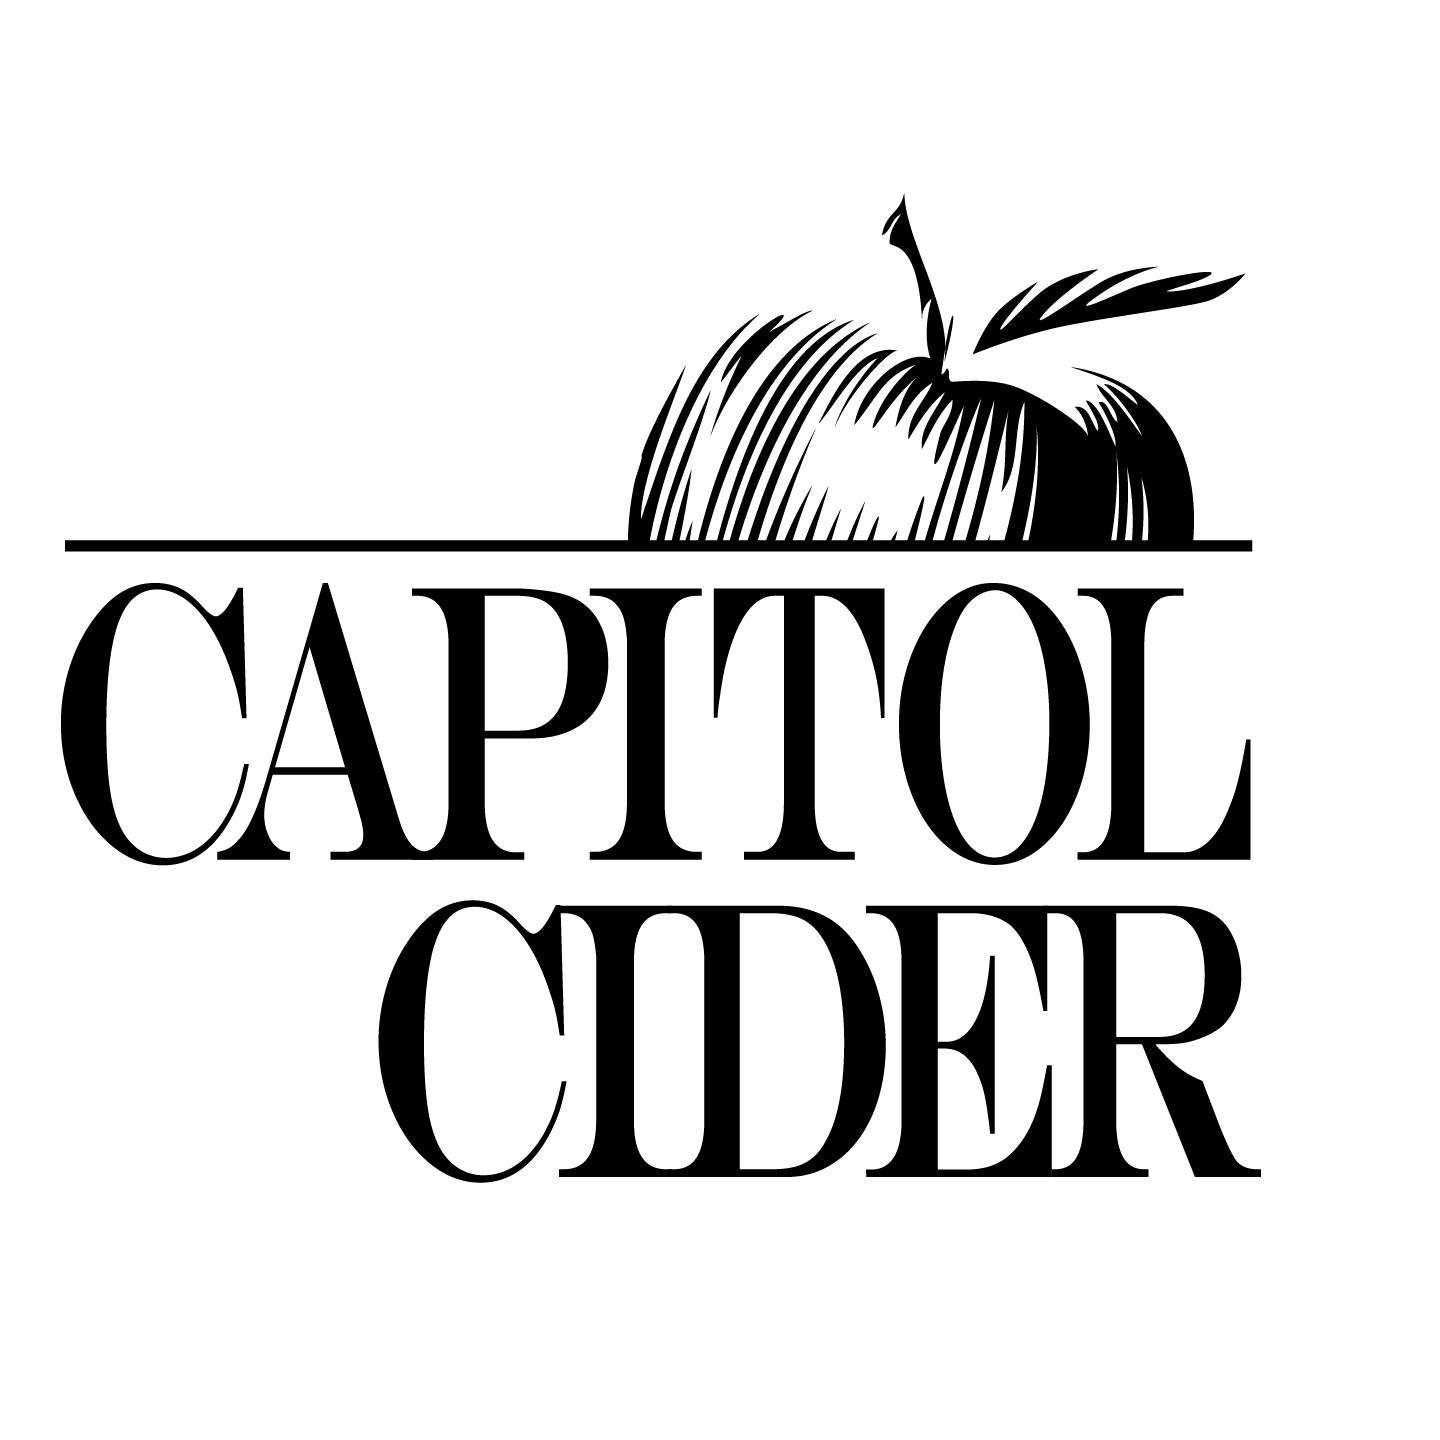 Company logo of Capitol Cider